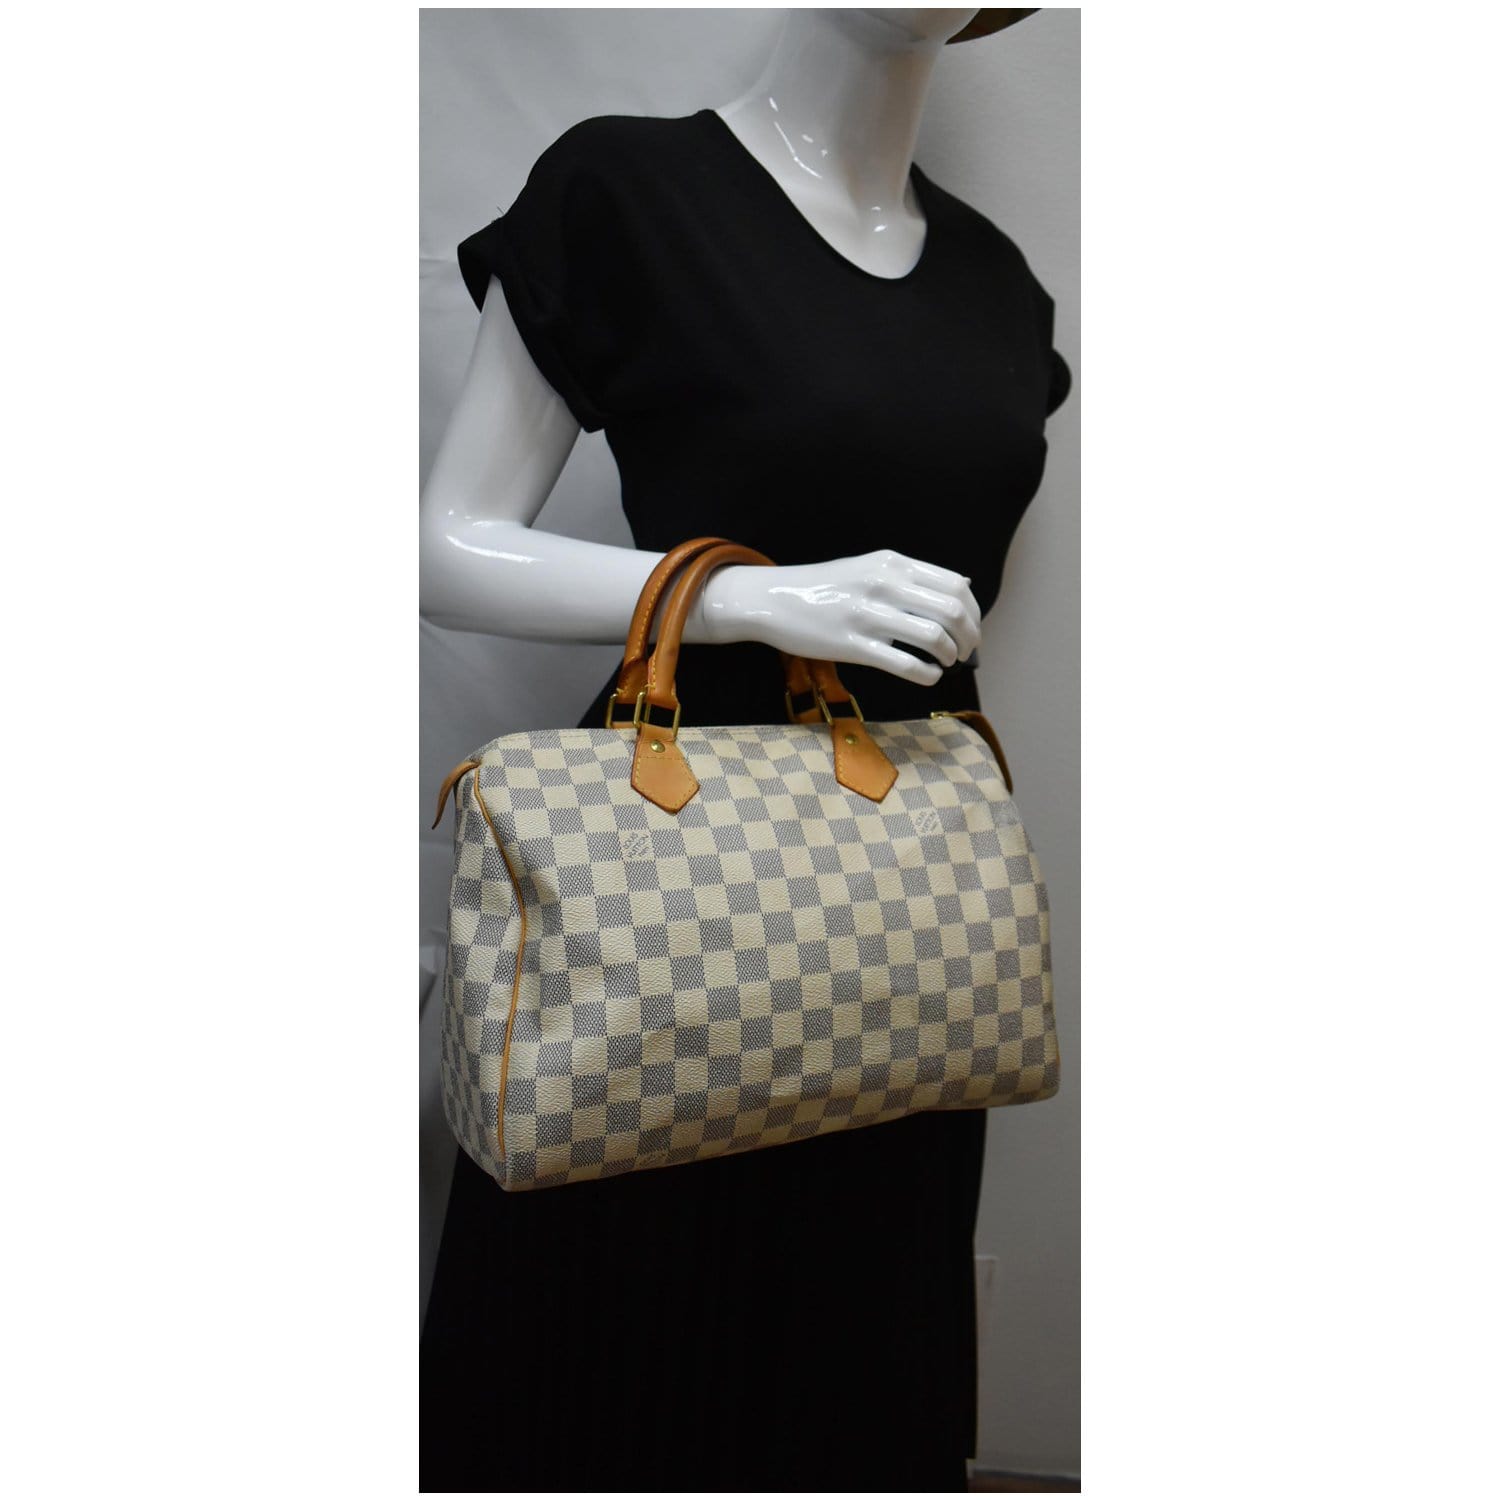 Louis Vuitton Speedy 30 Damier Azur Satchel White Bag